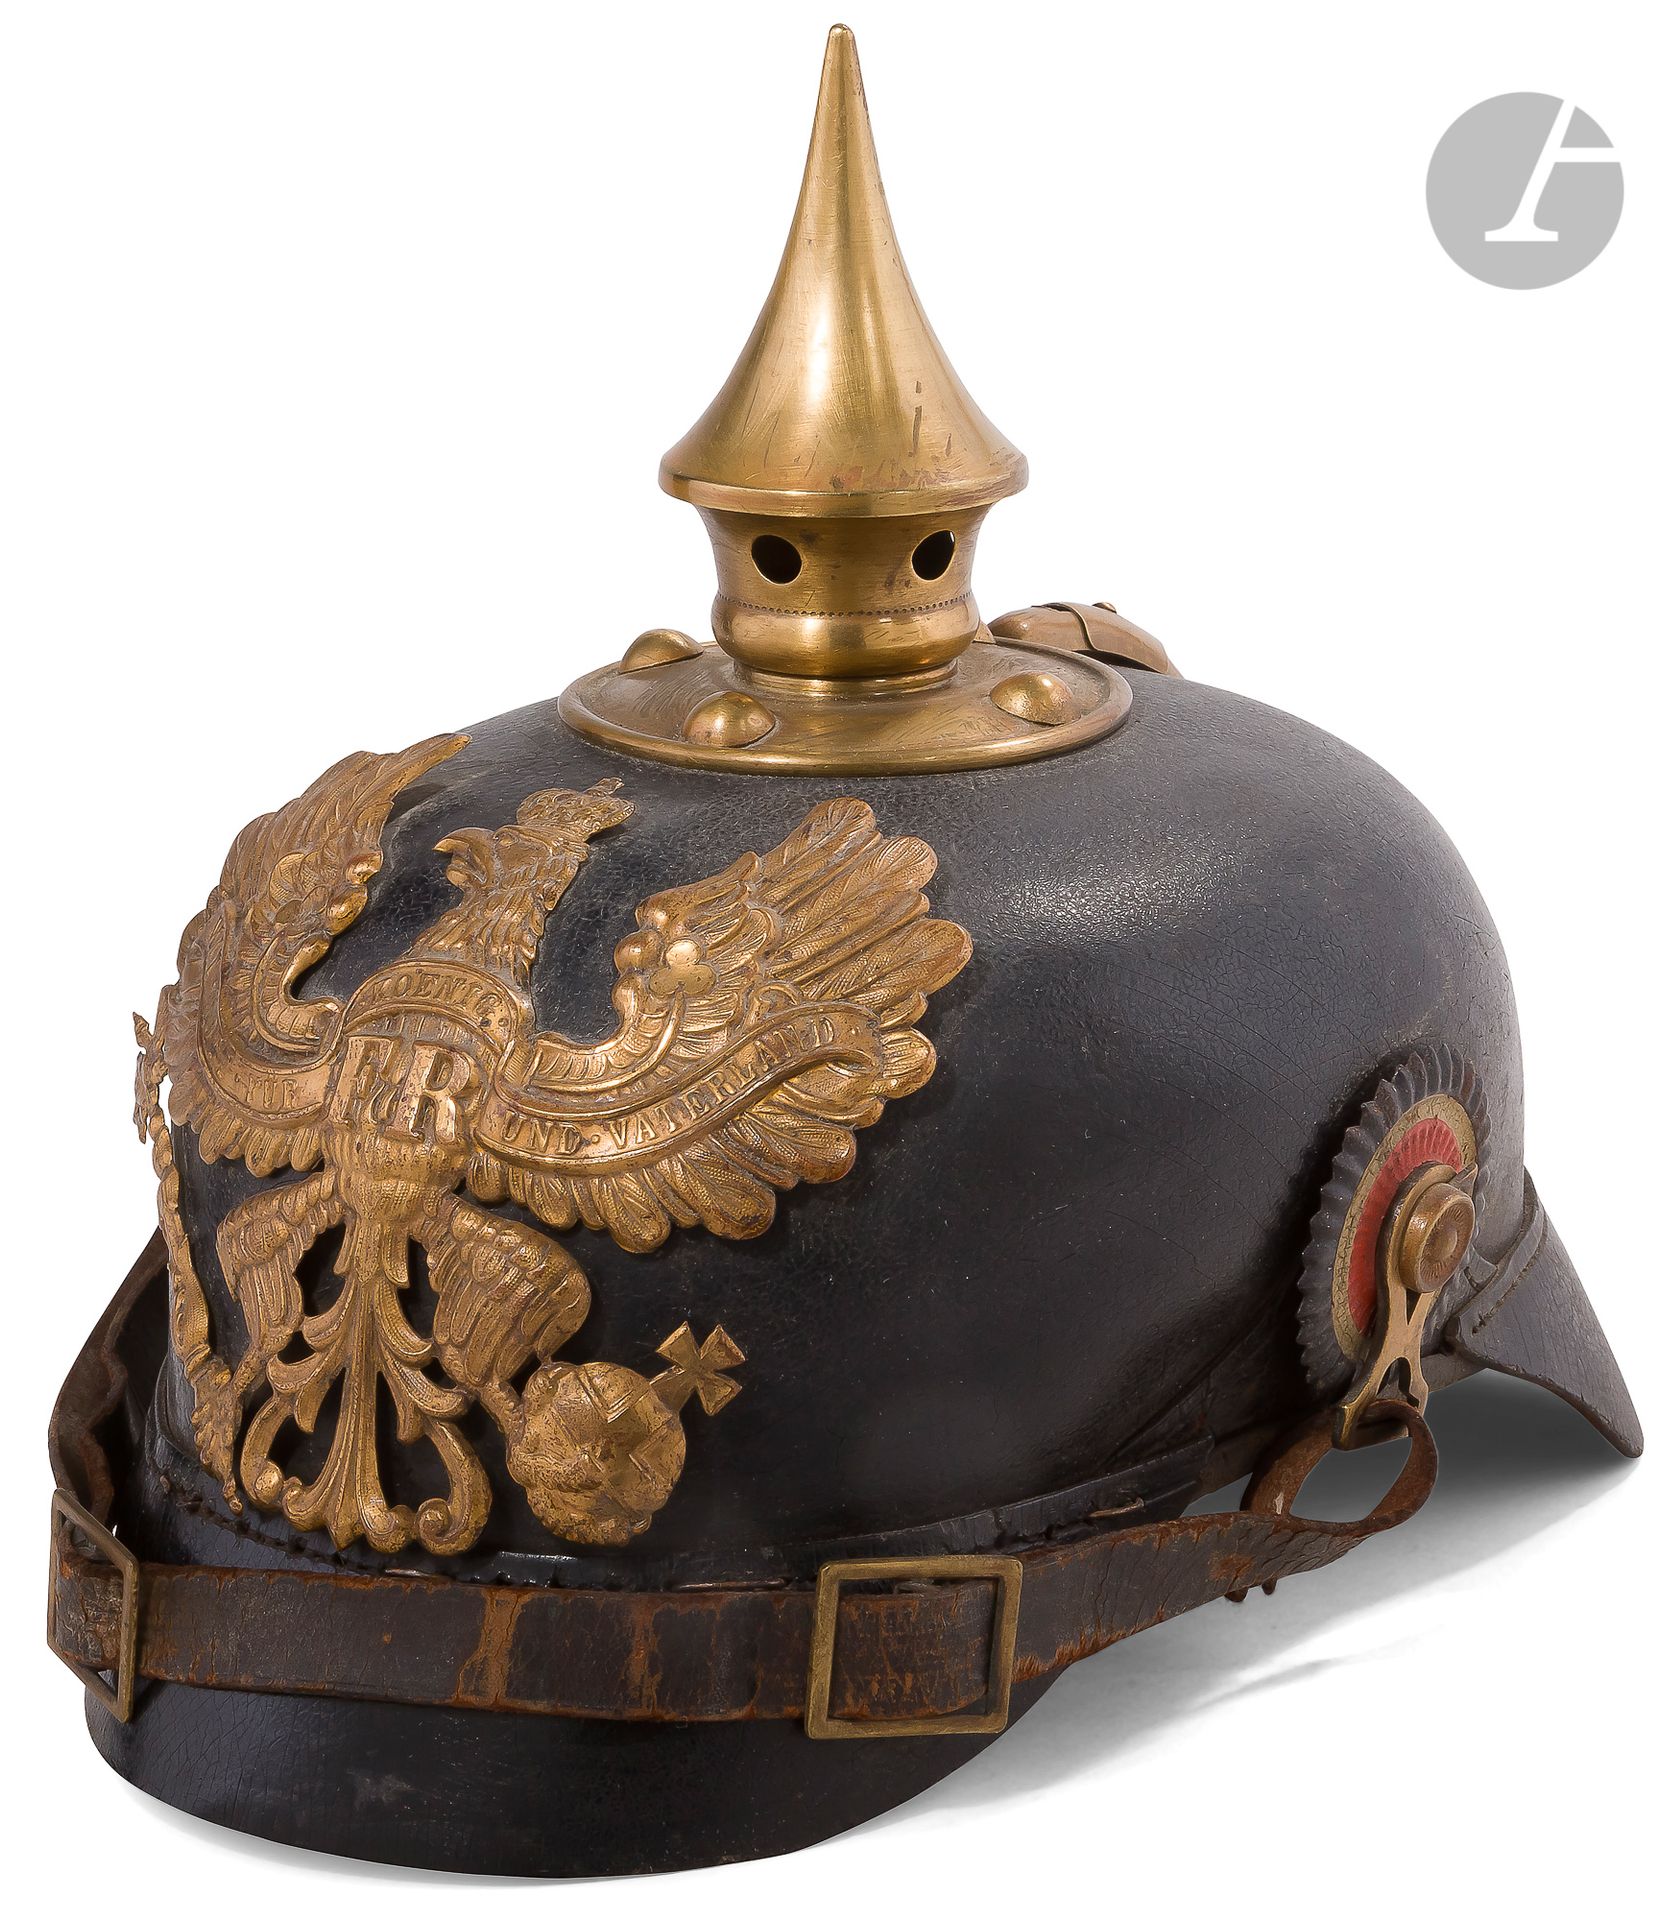 Null Preußischer Helm Modell 1895, mit
ledernem Kinnriemen. Teller mit Adler, Sp&hellip;